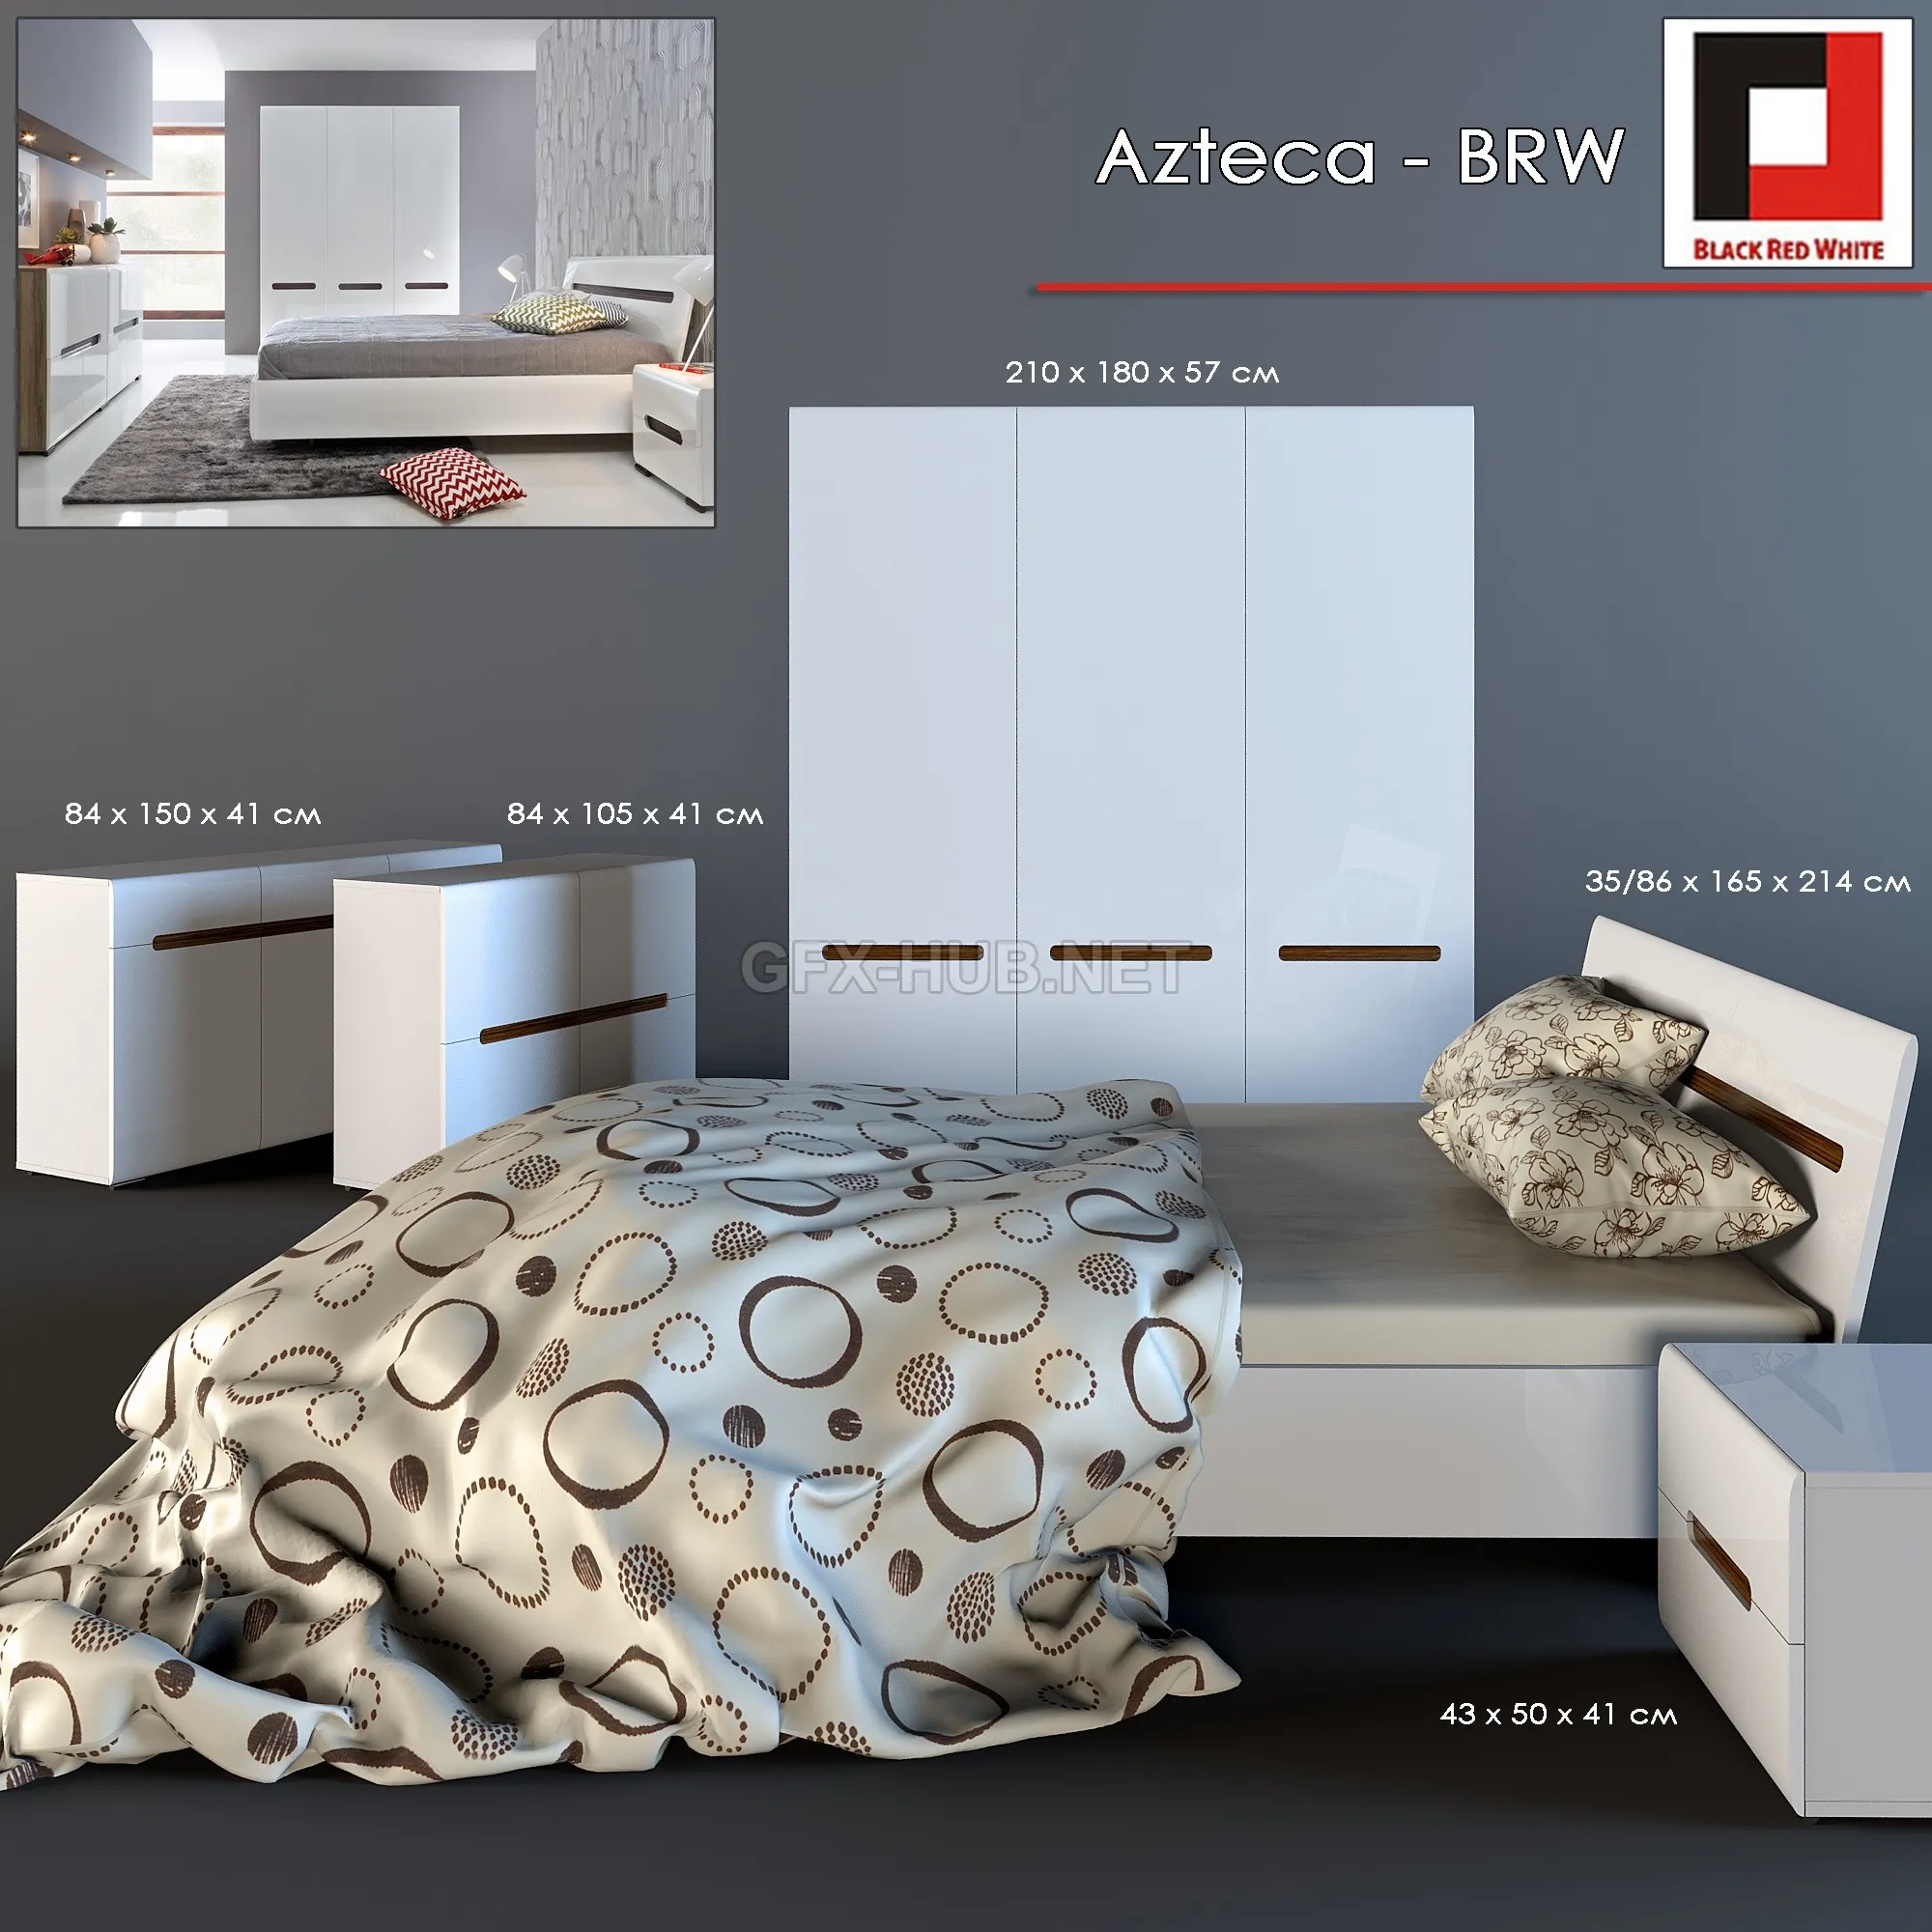 FURNITURE 3D MODELS – BRW-AZTECA bedroom